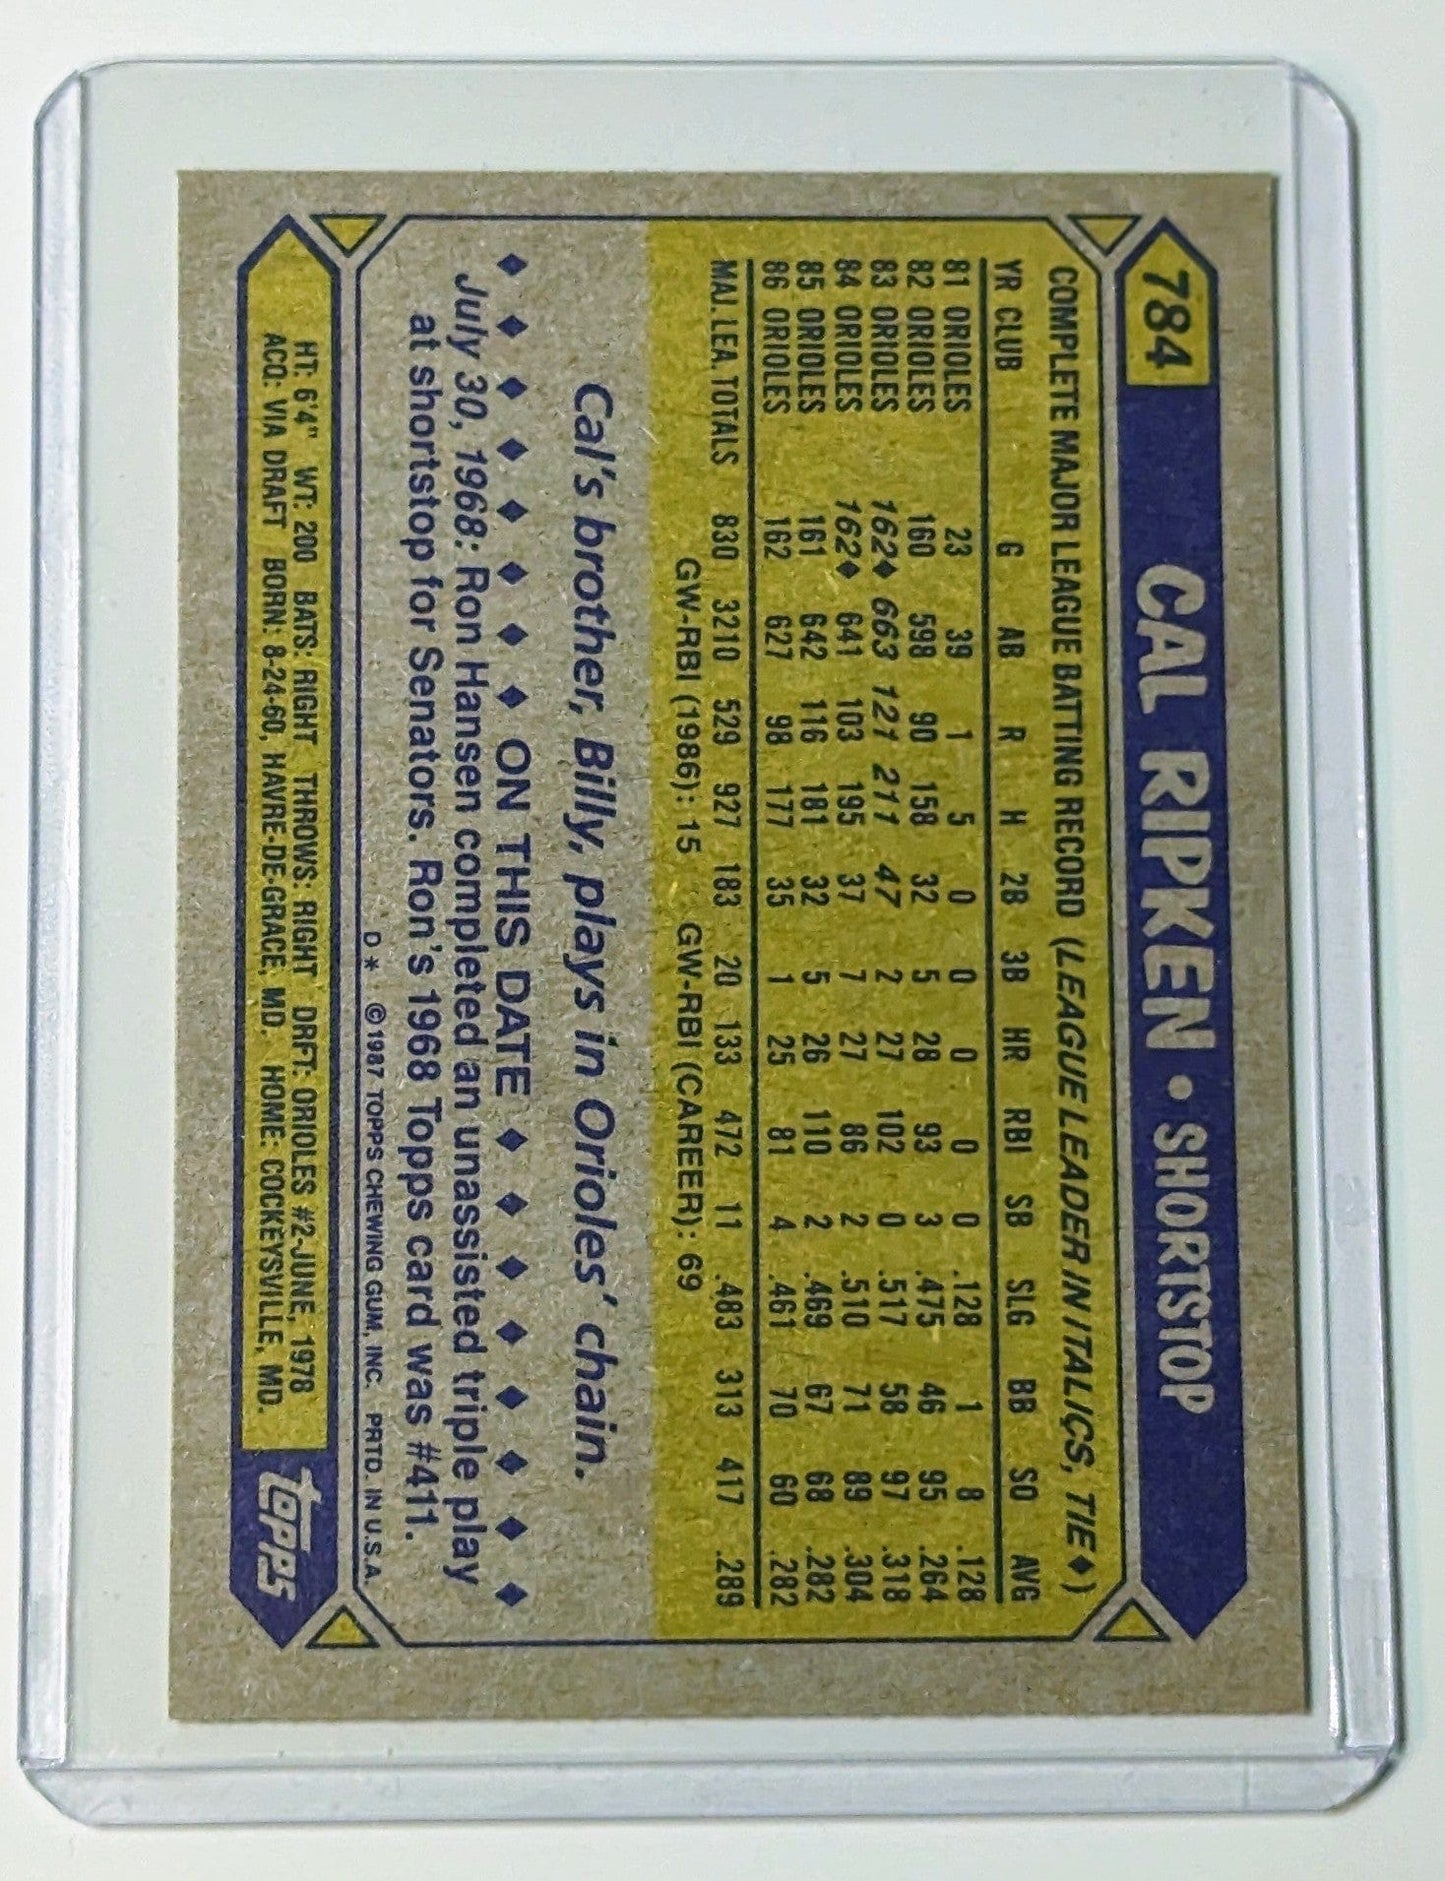 FIINR Baseball Card 1987 Topps Call Ripken Baseball Card # 784 - Mint Condition